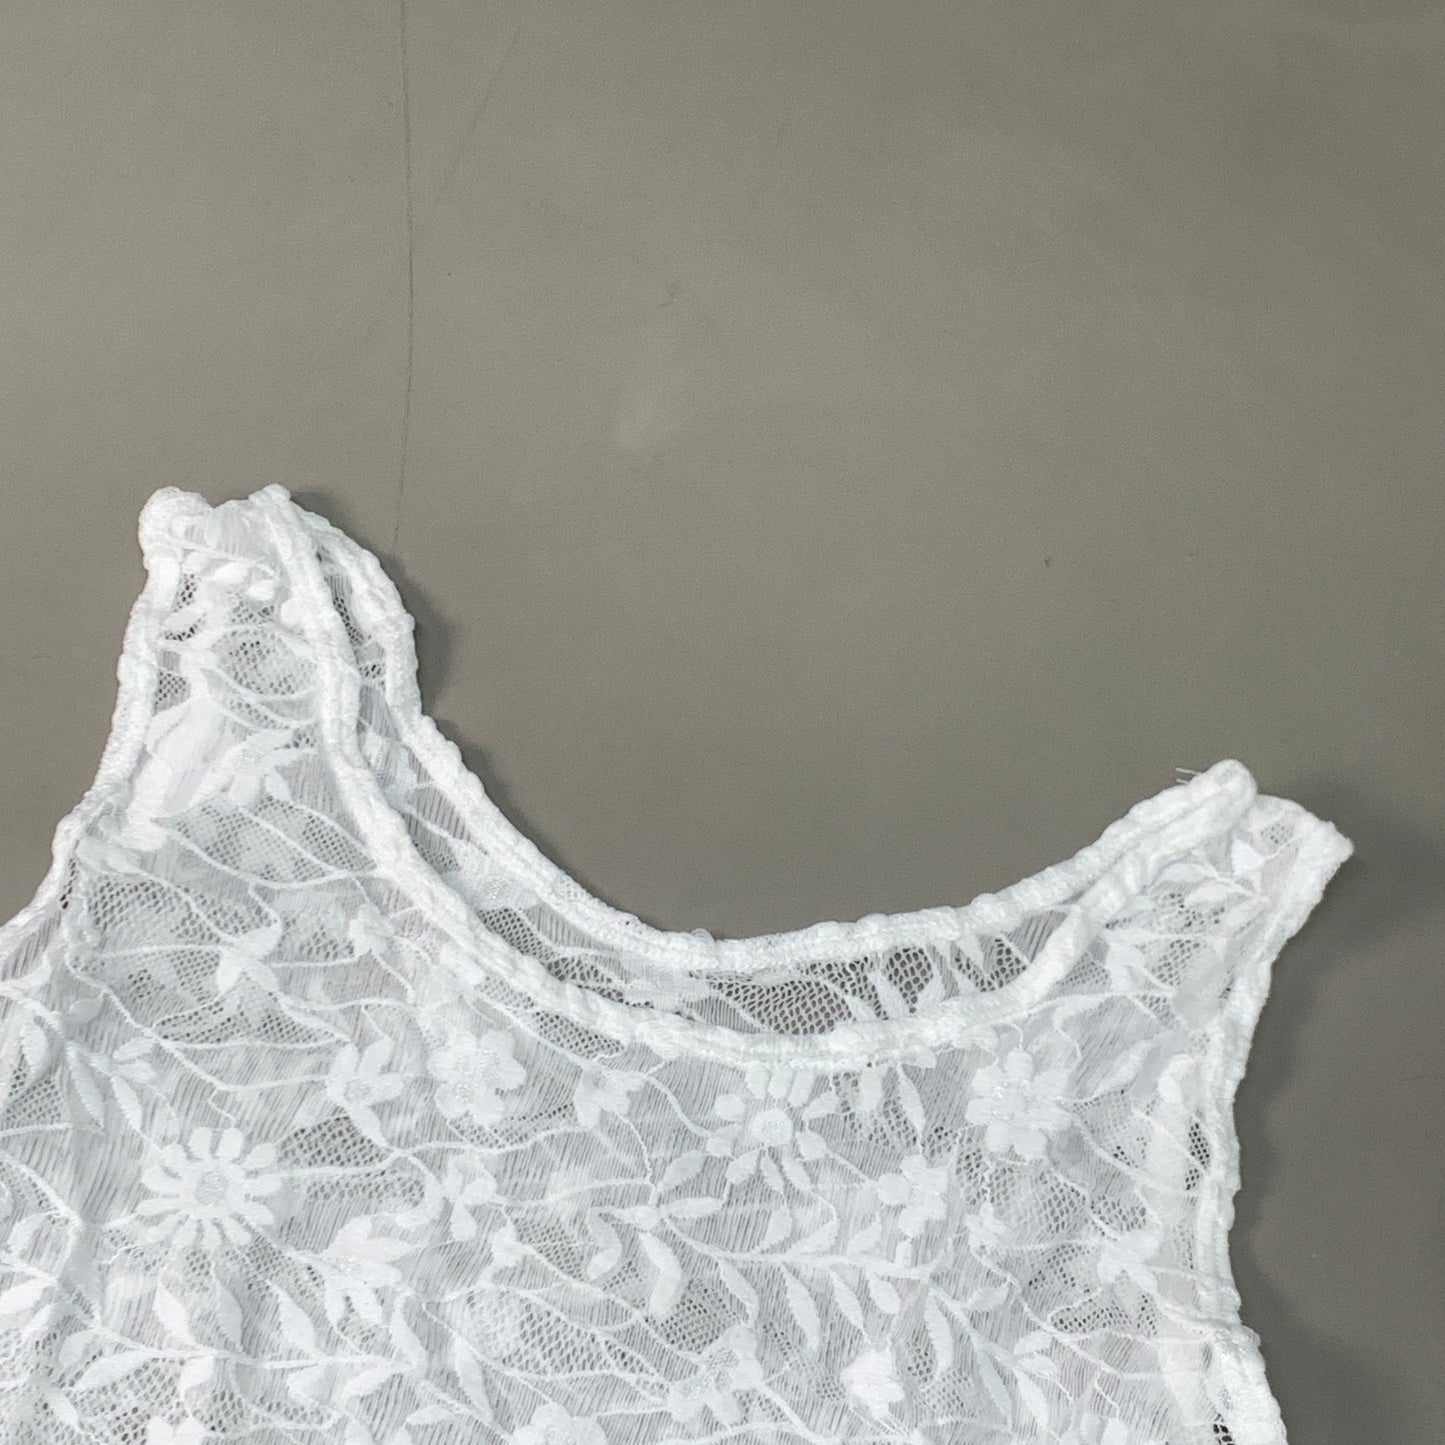 HALFTEE Full Lace Tank Nylon & Spandex Blend Floral White M (23)